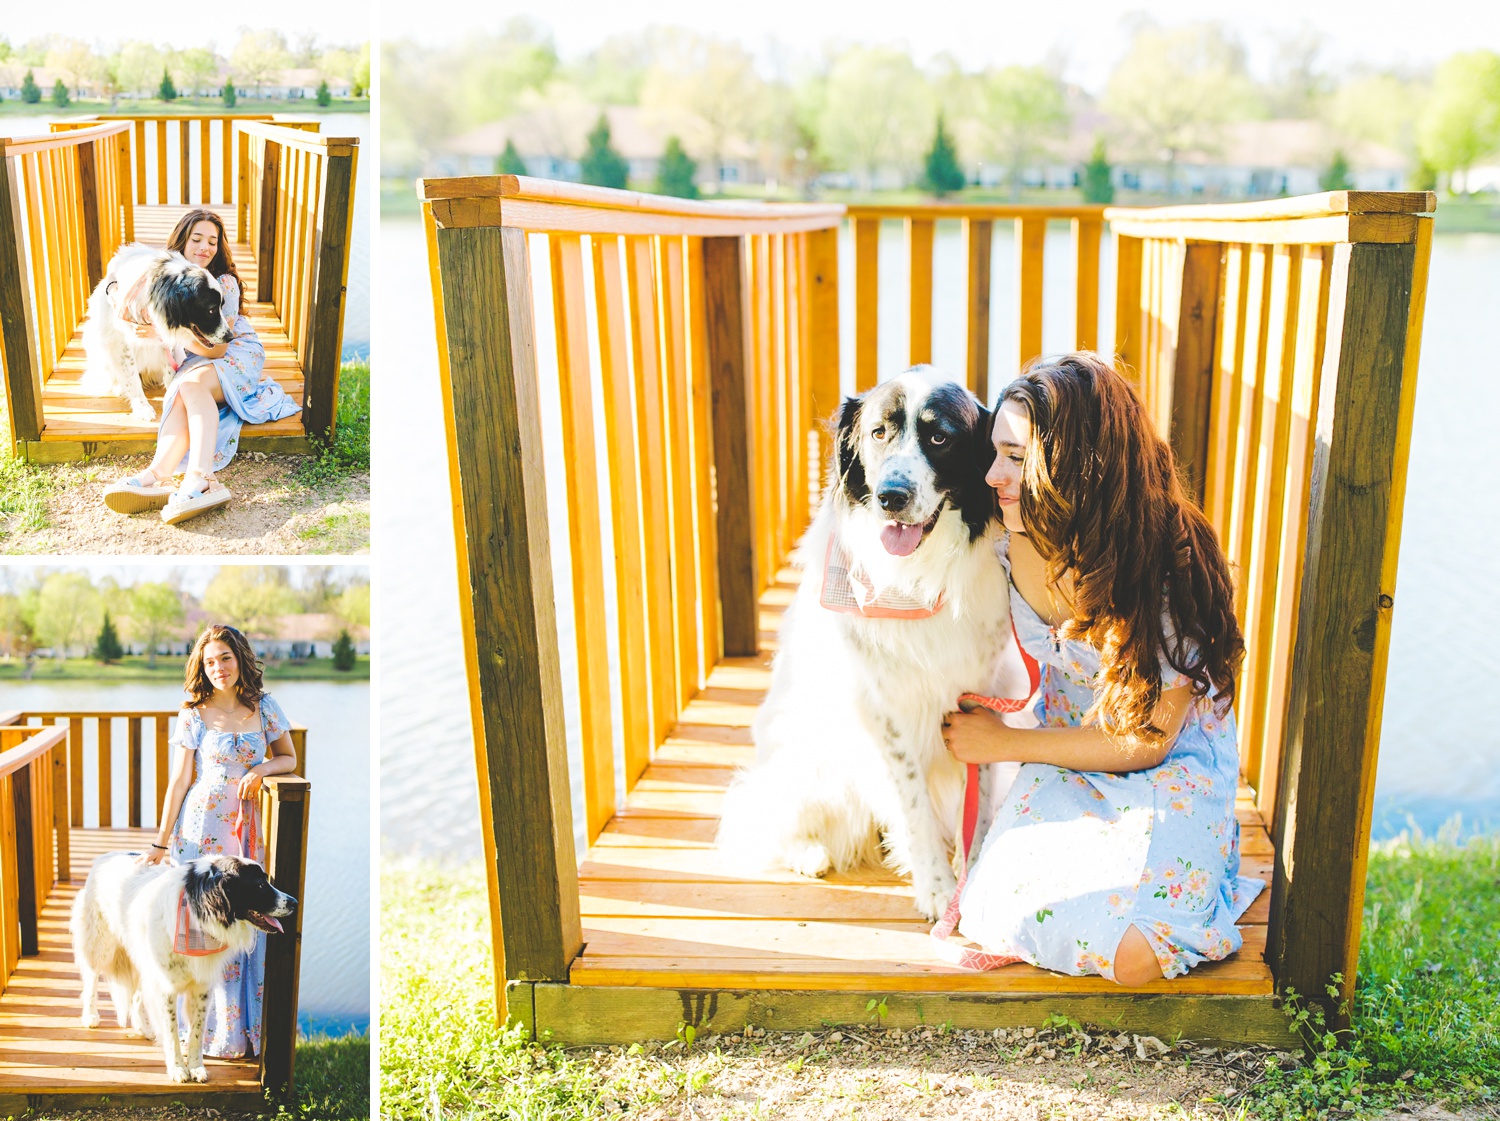 Senior Photographs of Senior Girl with Dog, Creative Posing Idea